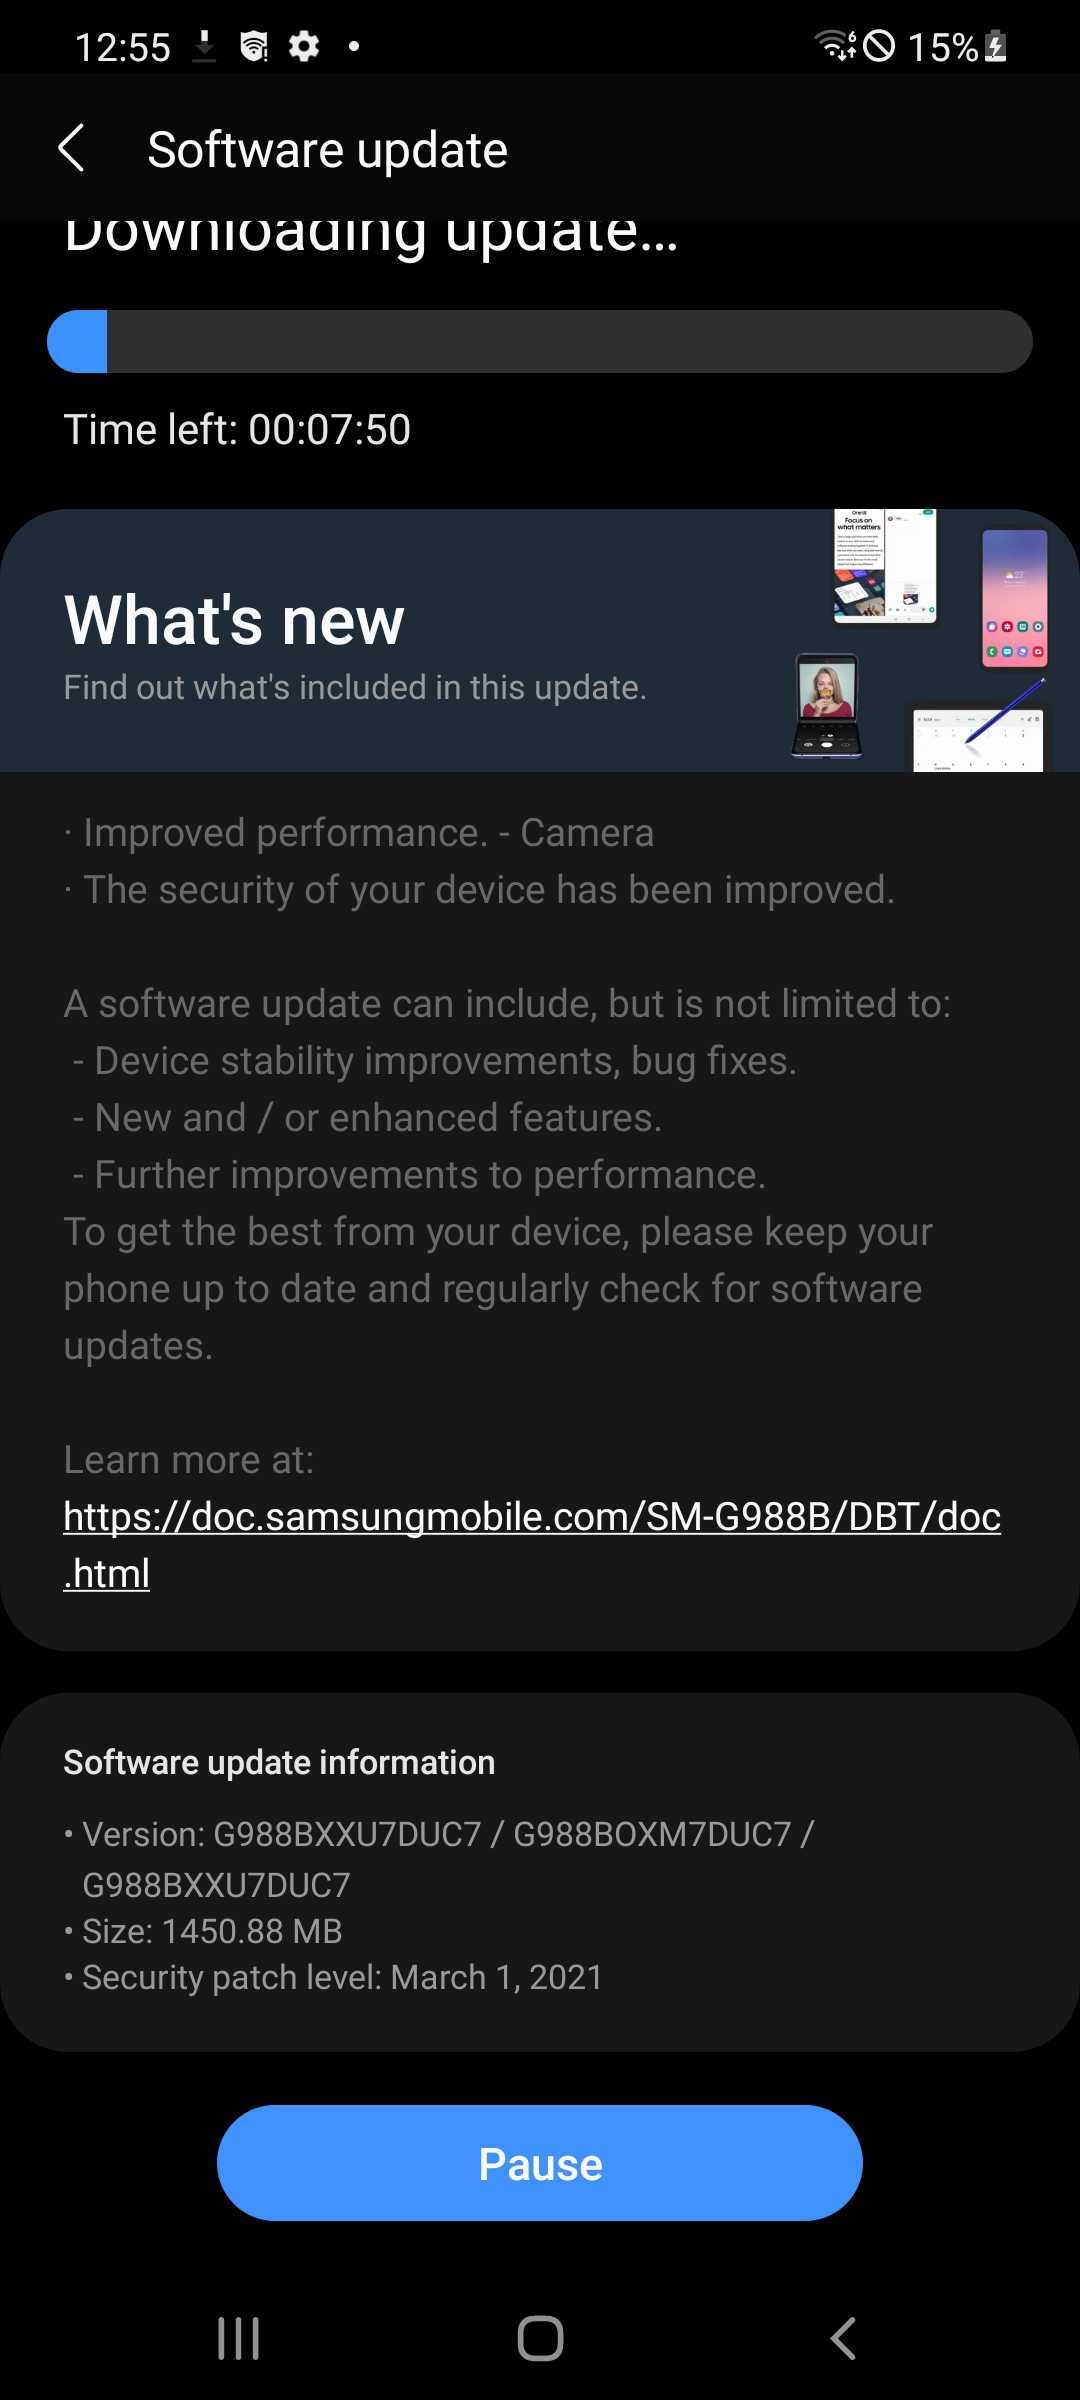 Samsung-Galaxy-S20-Ultra-Update-G988BXXU7DUC7.jpg